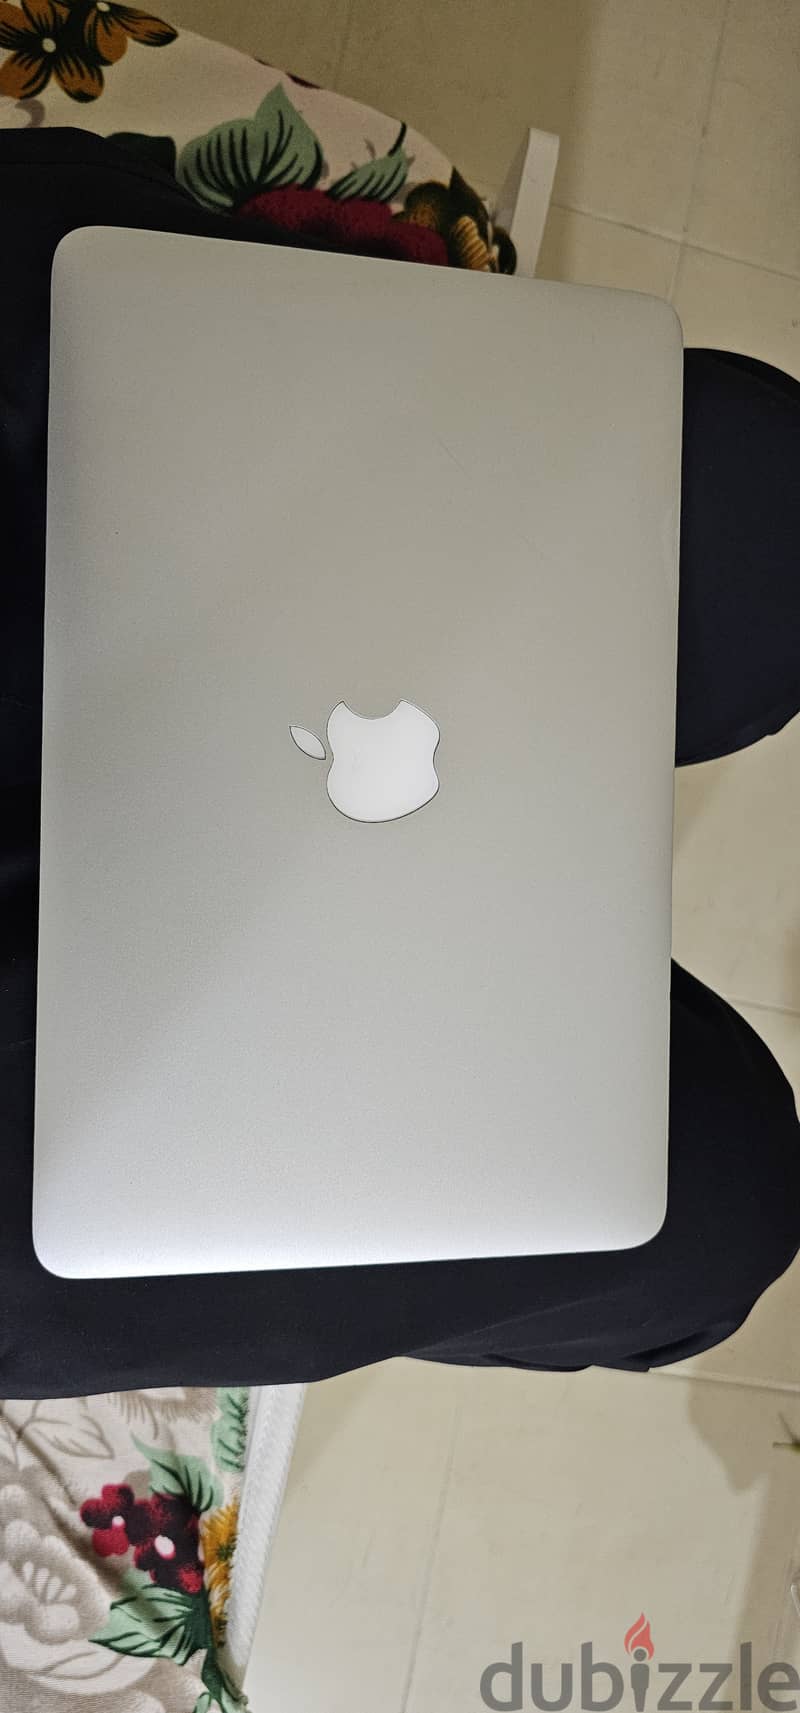 Macbook air for sale in juffair 2012 model 64gb 2